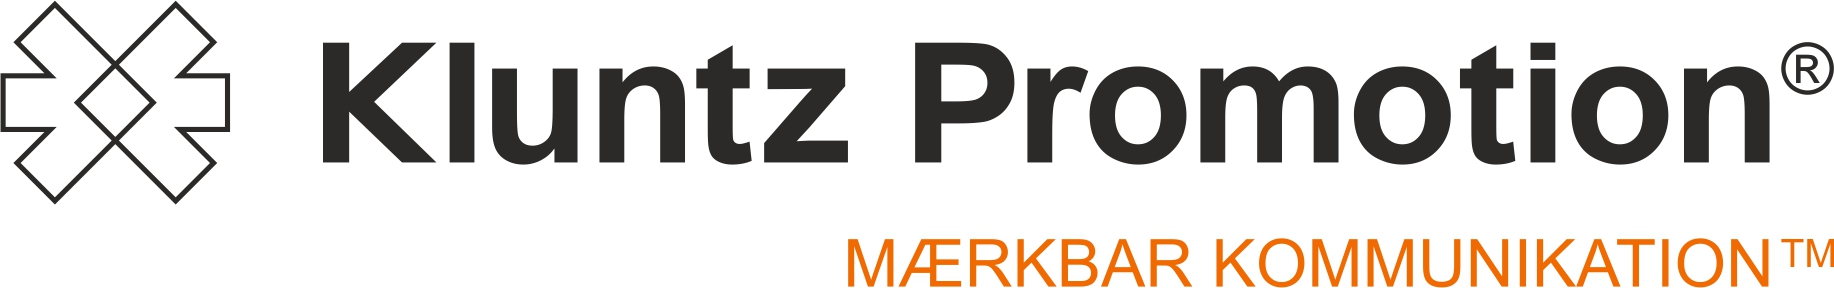 Kluntz Promotion logo